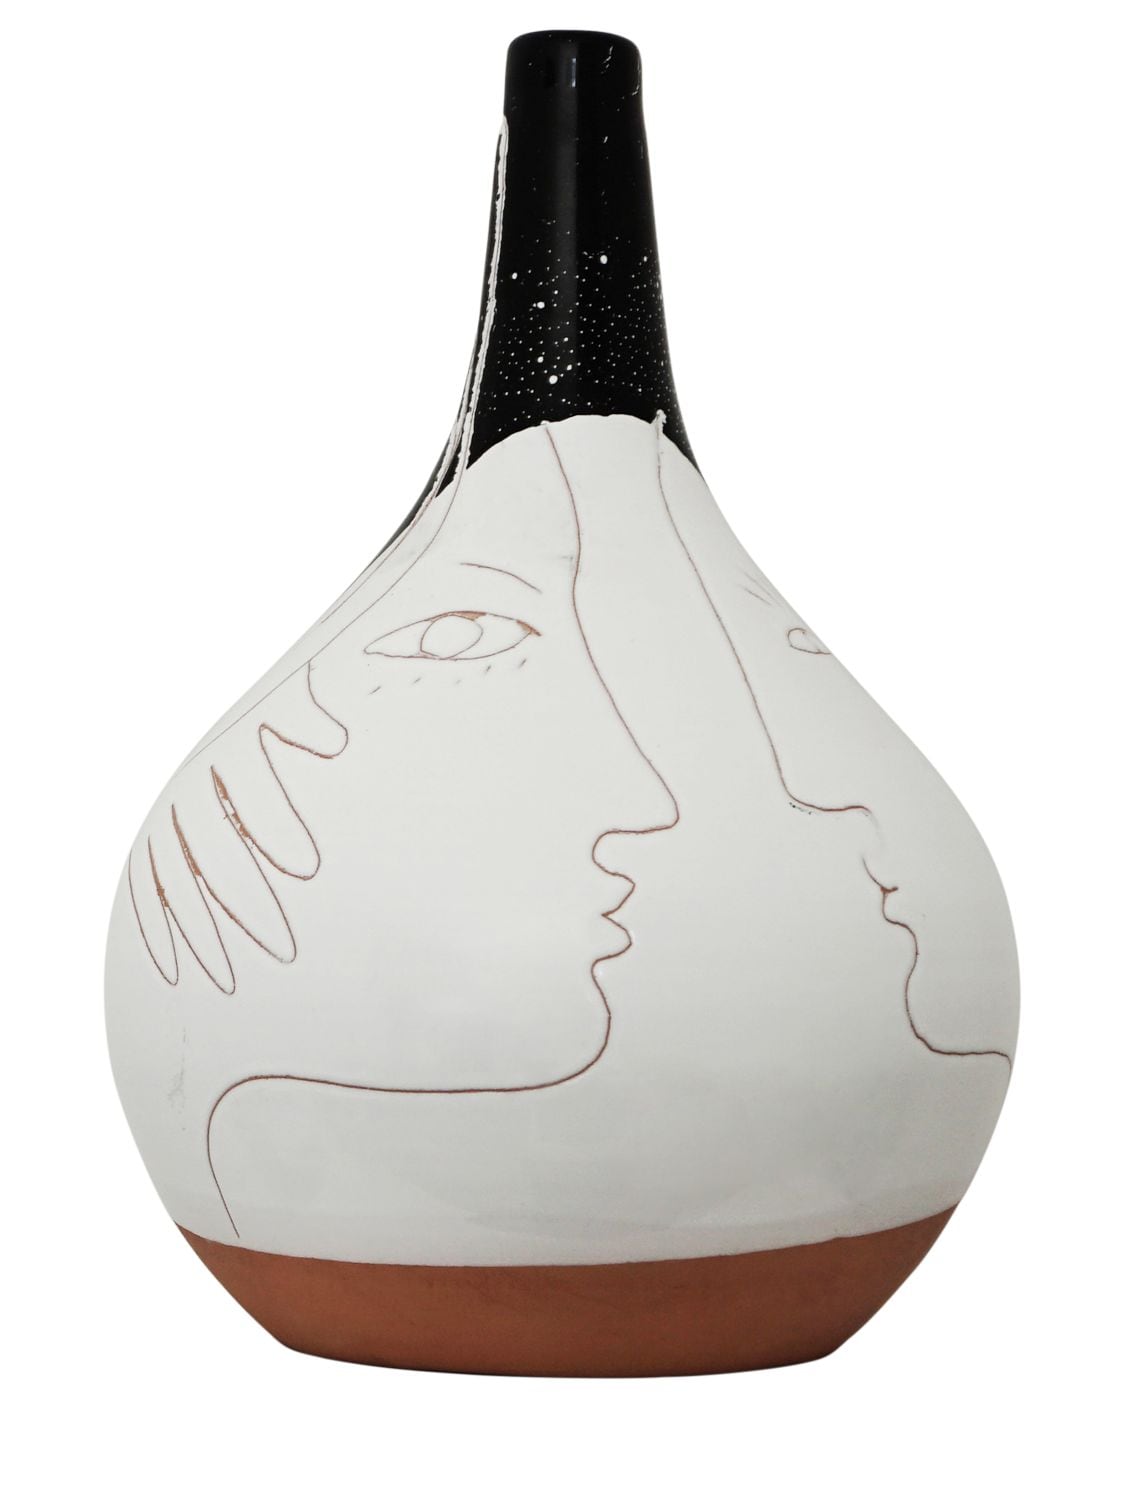 Antonio Marras + Kiasmo Vaso Pezzo Unico 1 Ceramic Vase In Multicolor